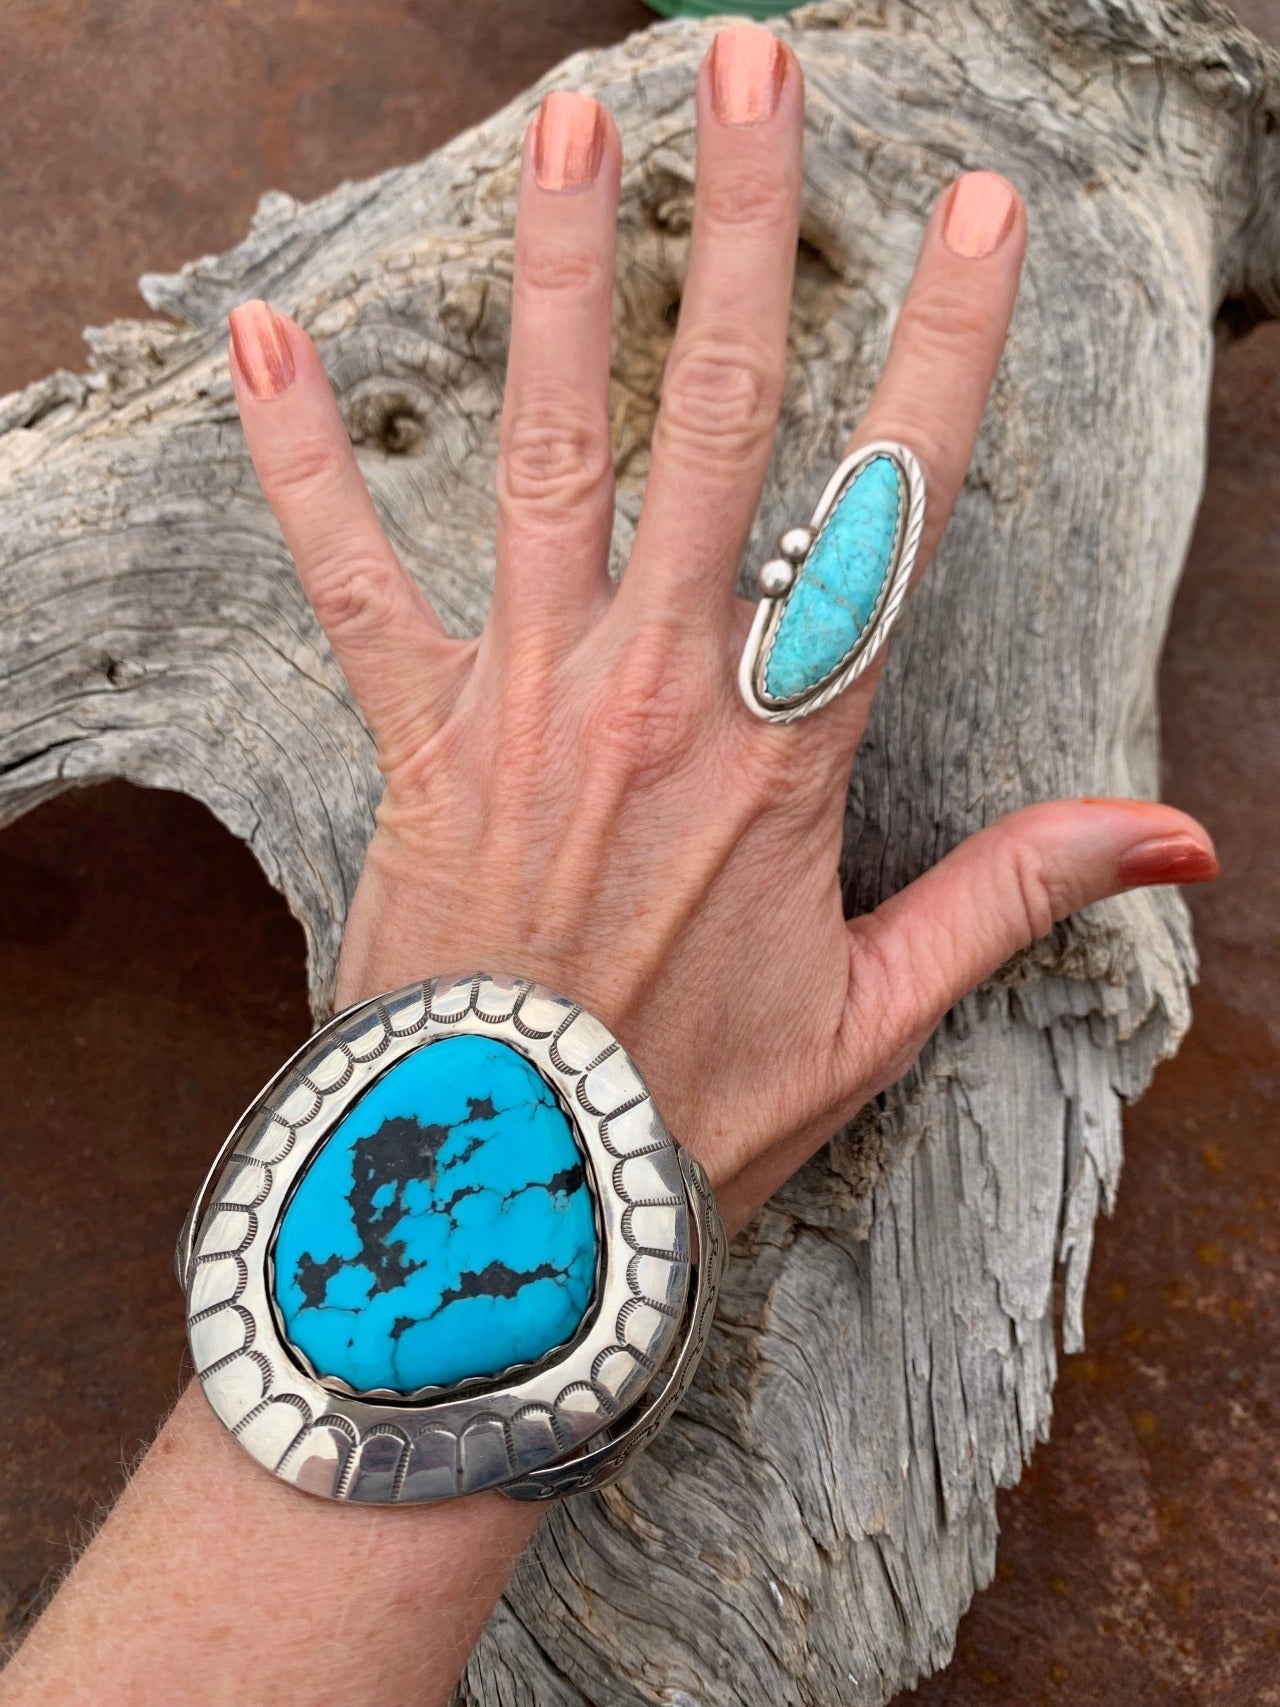 Vintage Navajo Ring With Elongated Turquoise Stone – Turquoise & Tufa